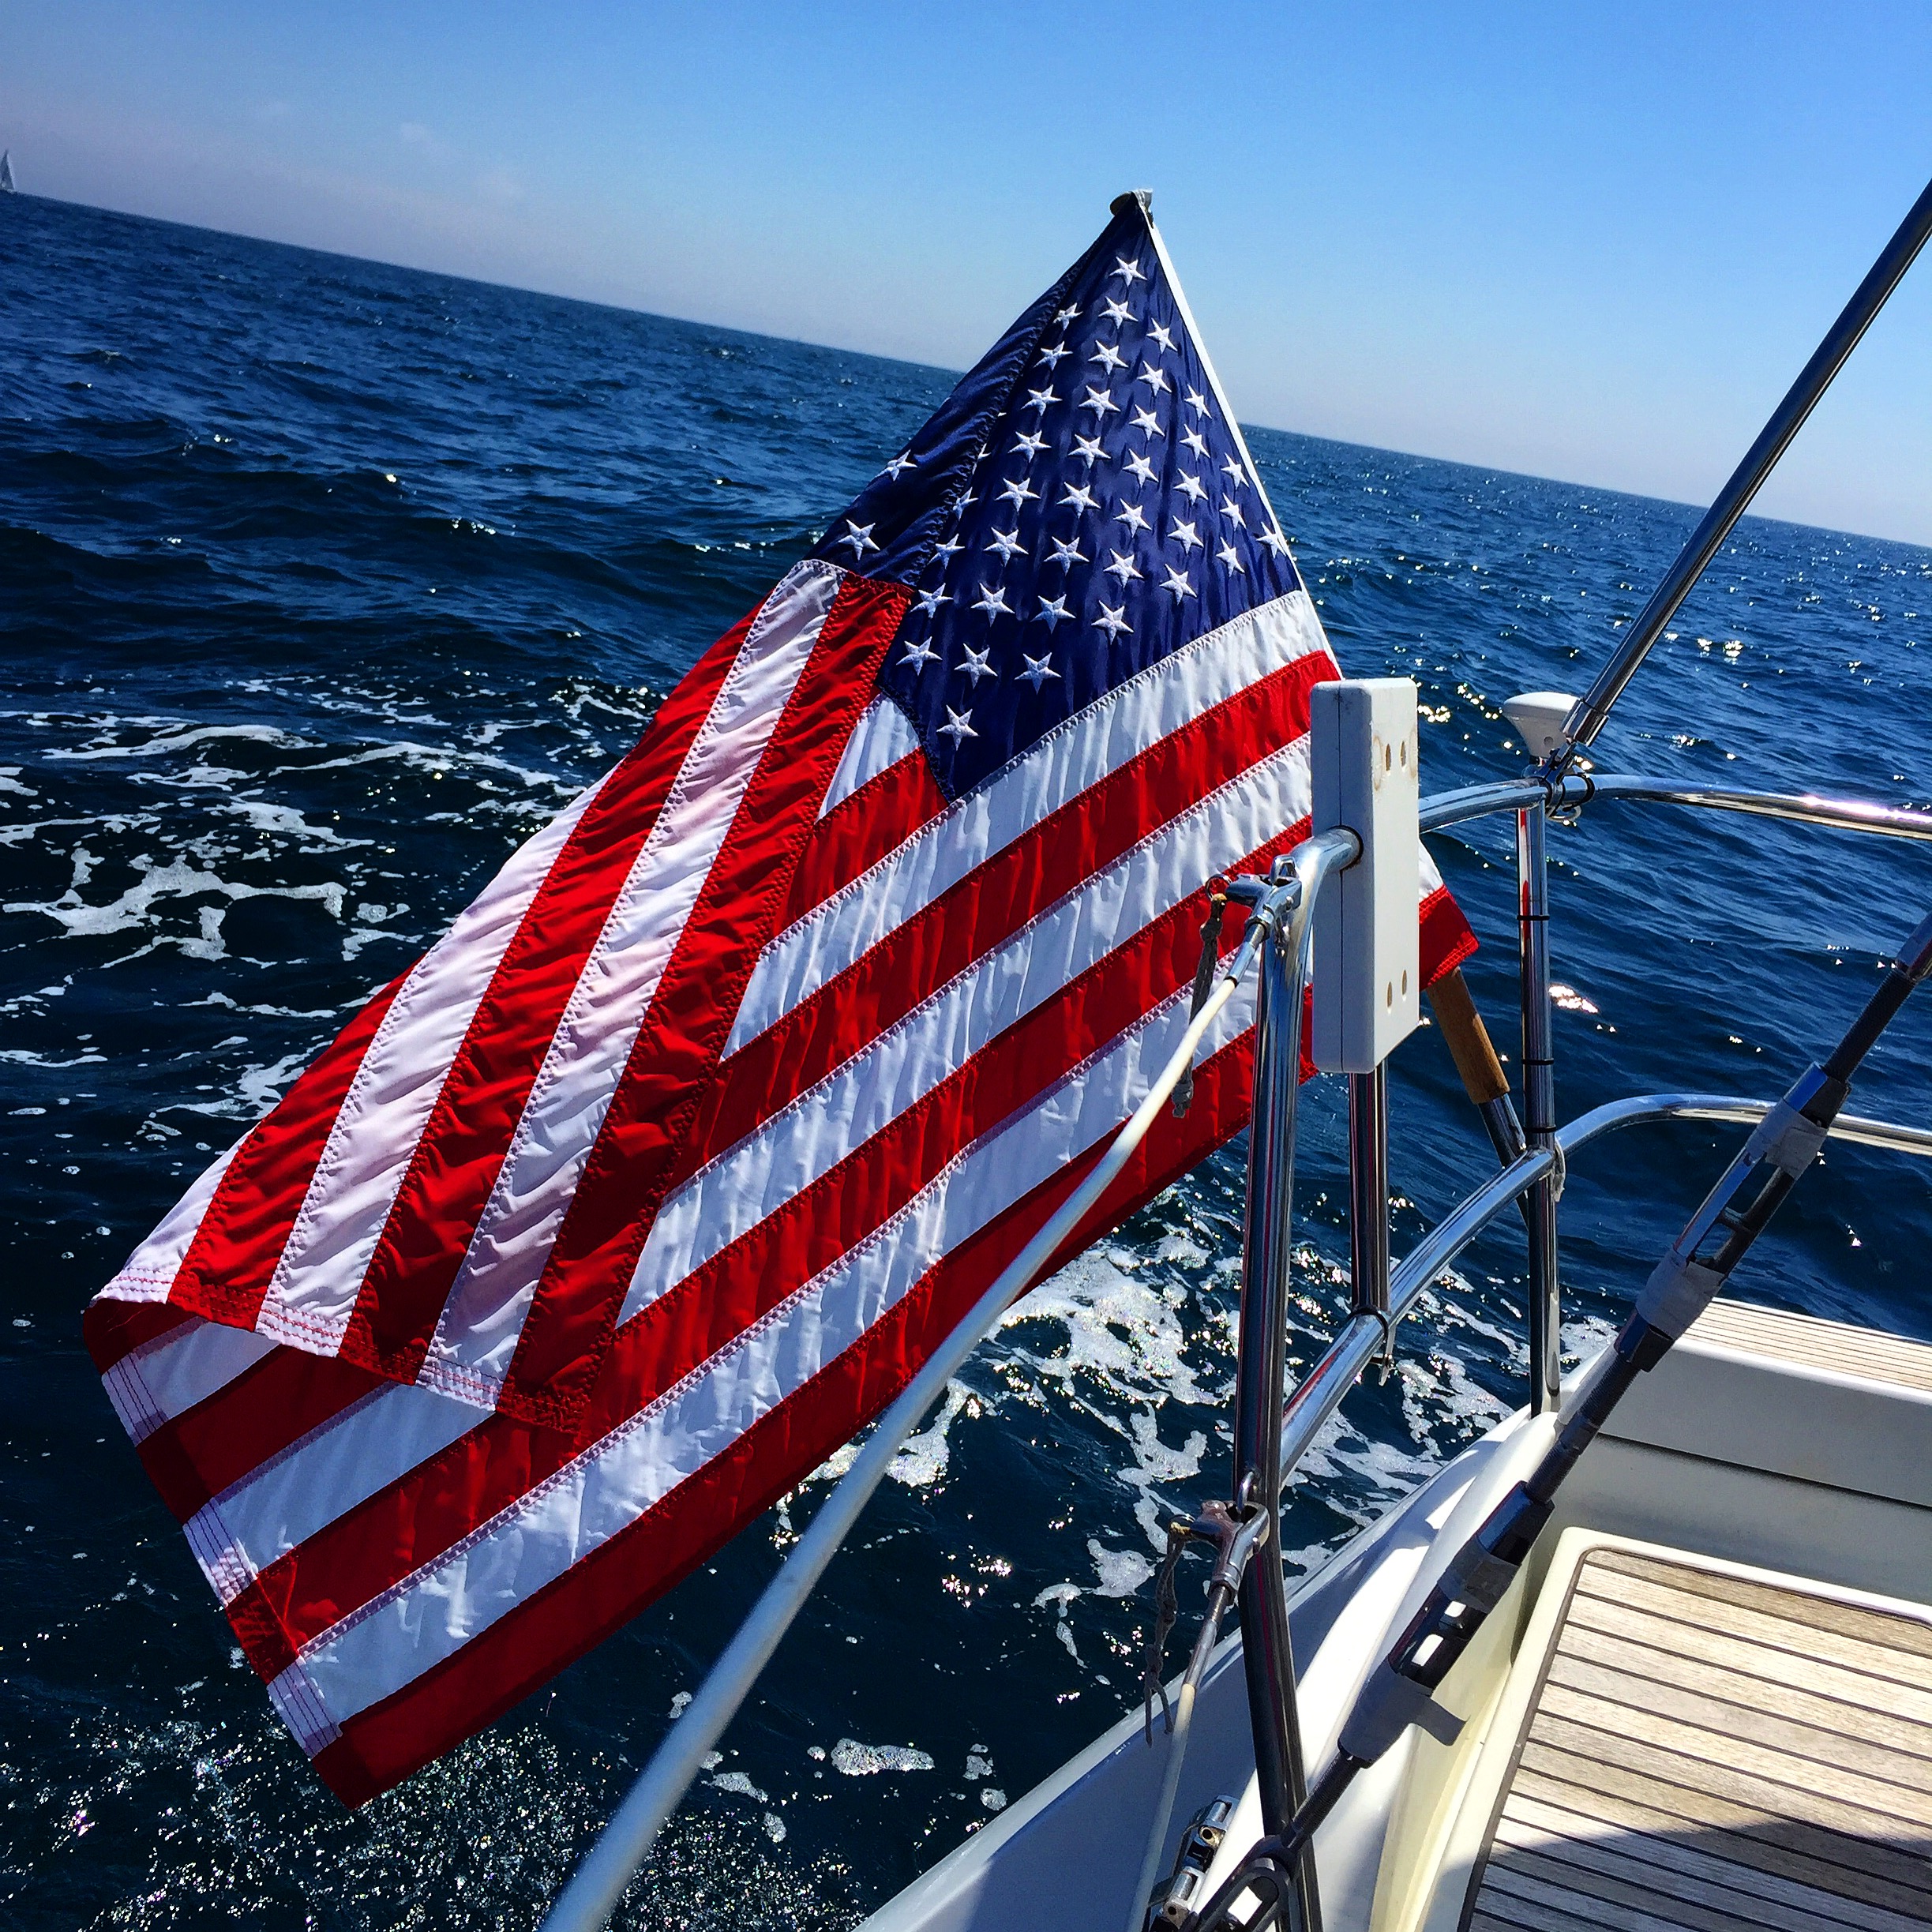 American flag on a sailboat near Nantucket